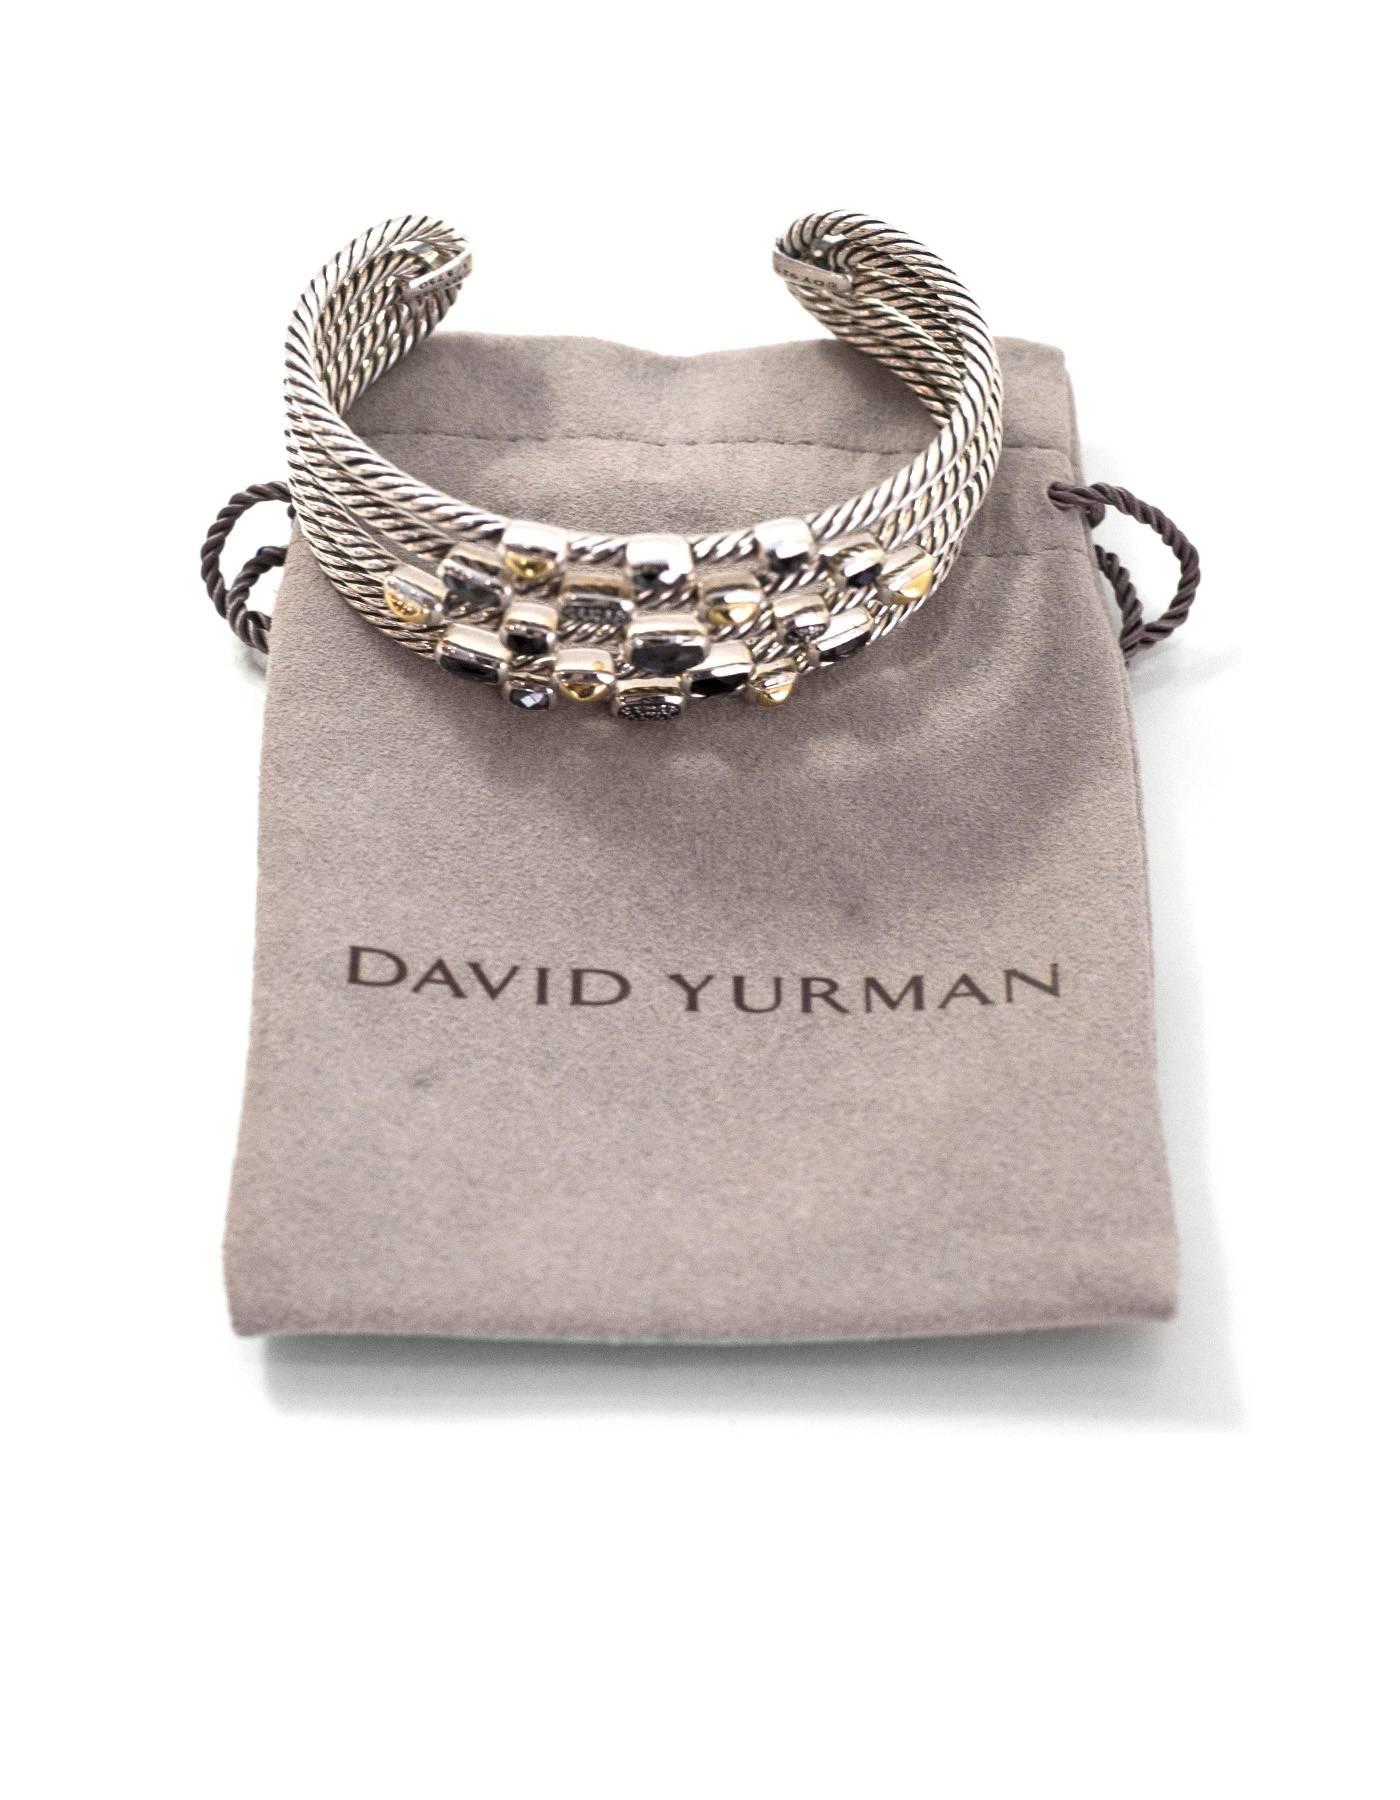 David Yurman Wide Five Row Confetti Cuff Bracelet with Dust Bag 1